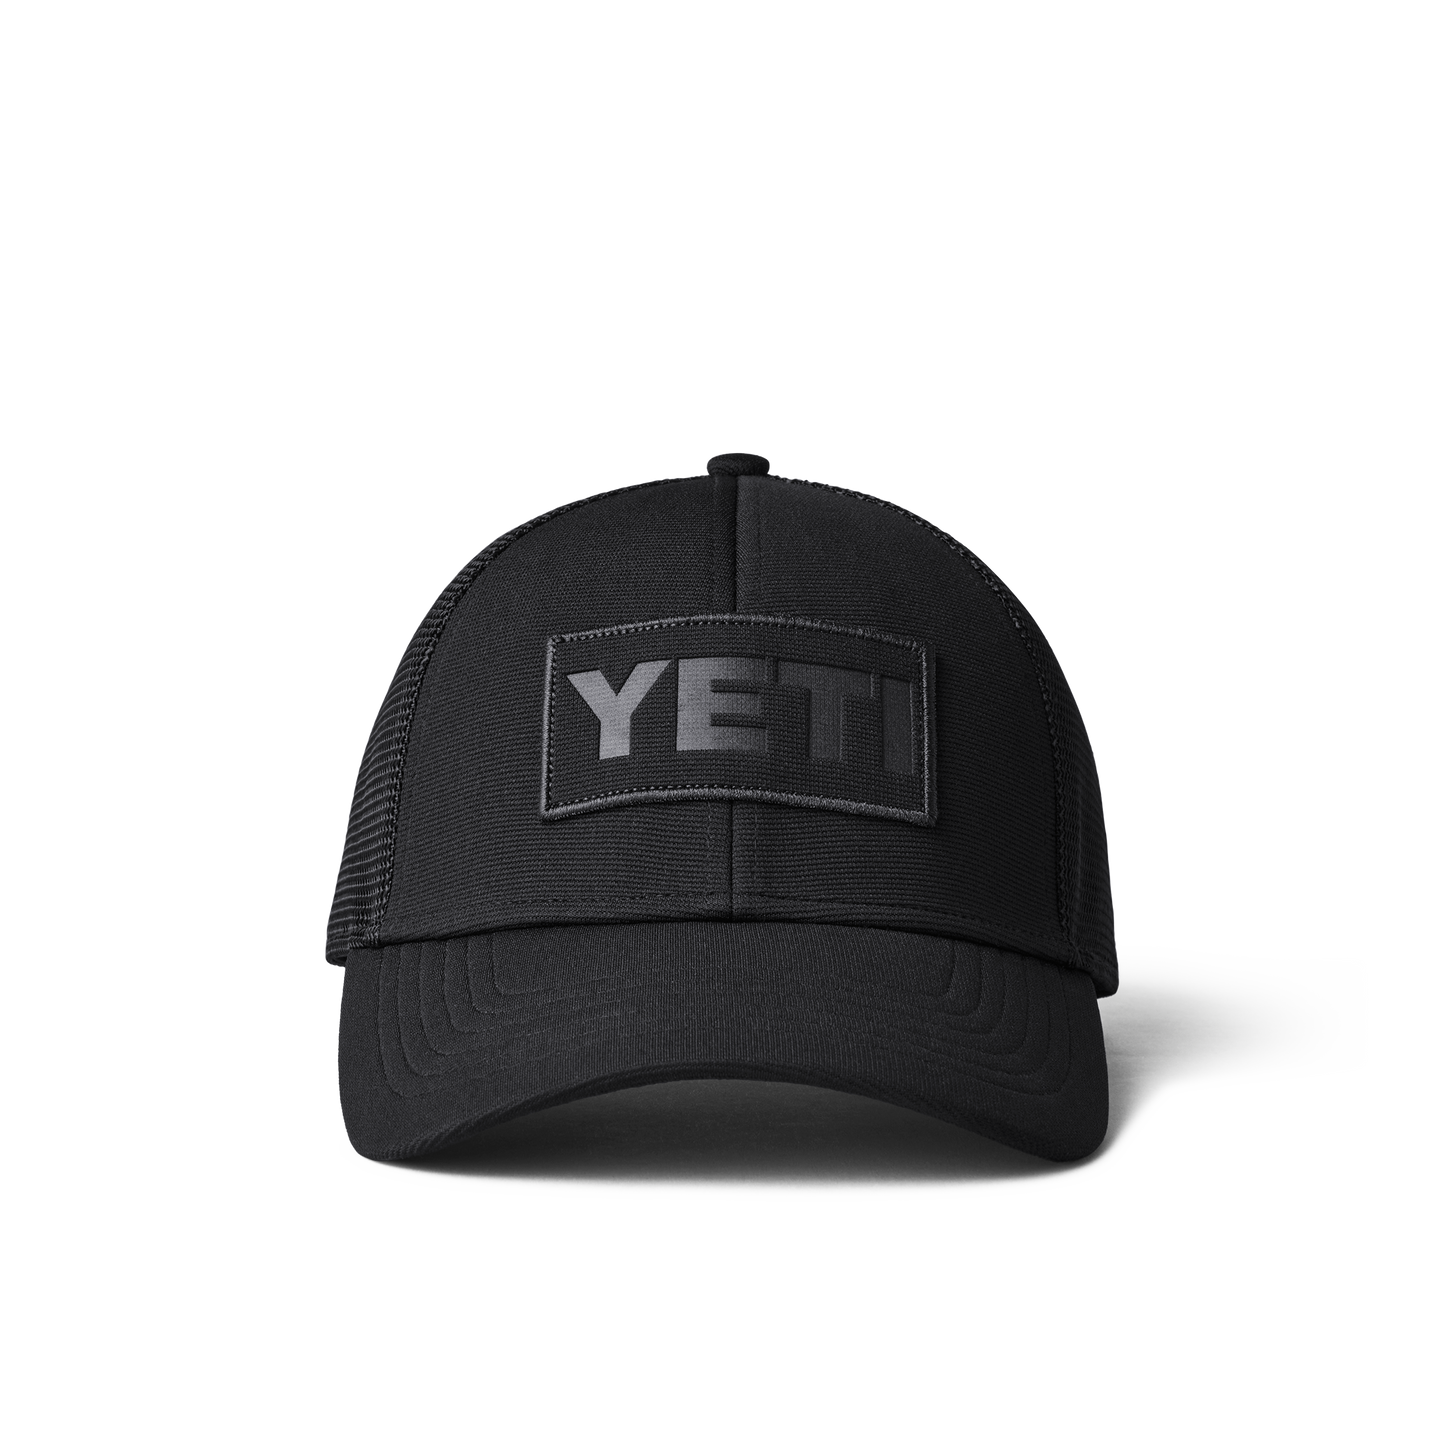 YETI Low Pro Trucker Hat Black on Black Black/Black